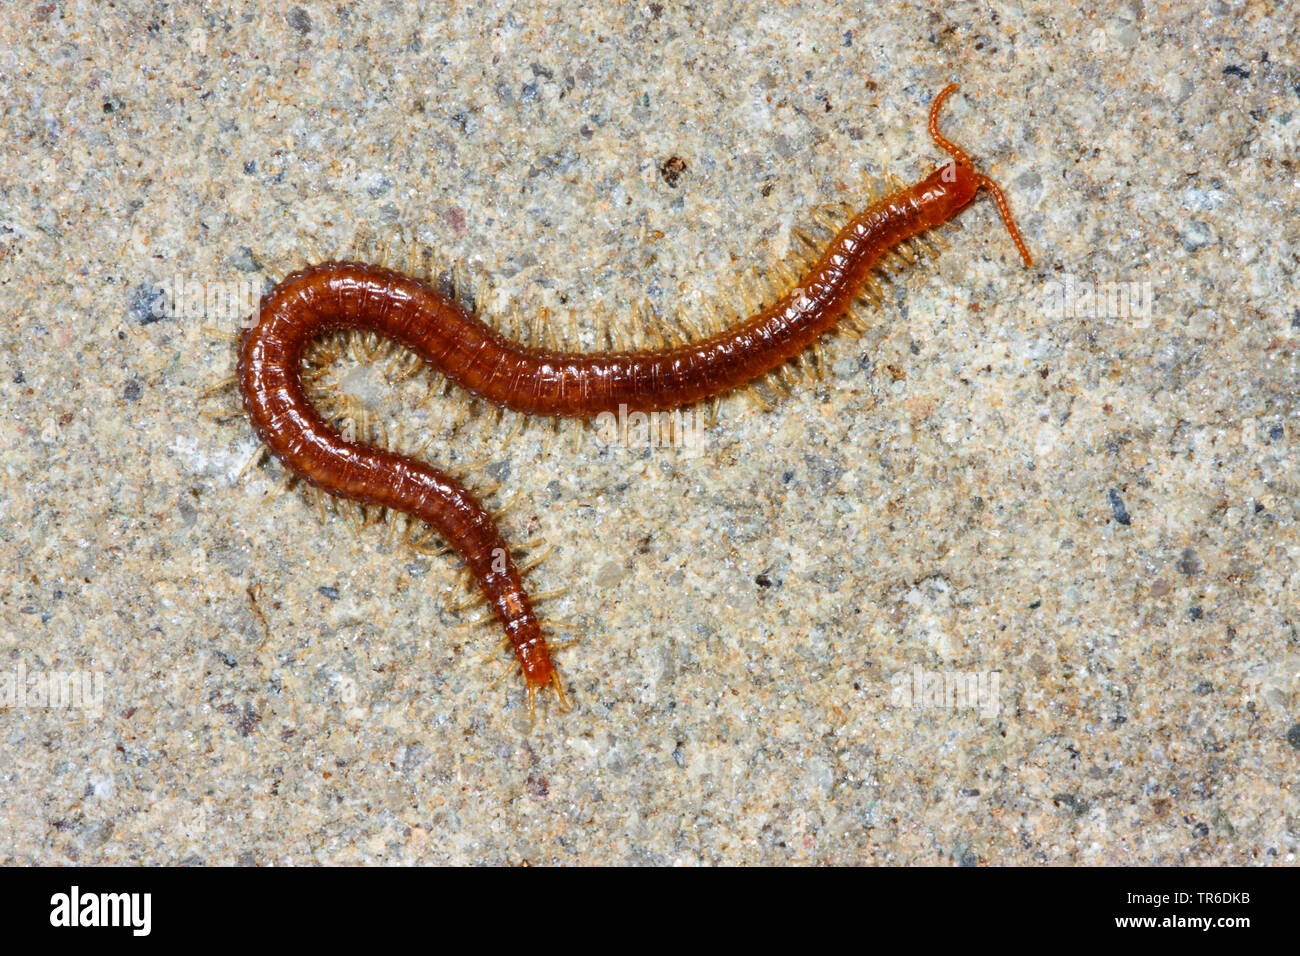 centipede (Geophilus longicornis), on the ground, Germany Stock Photo